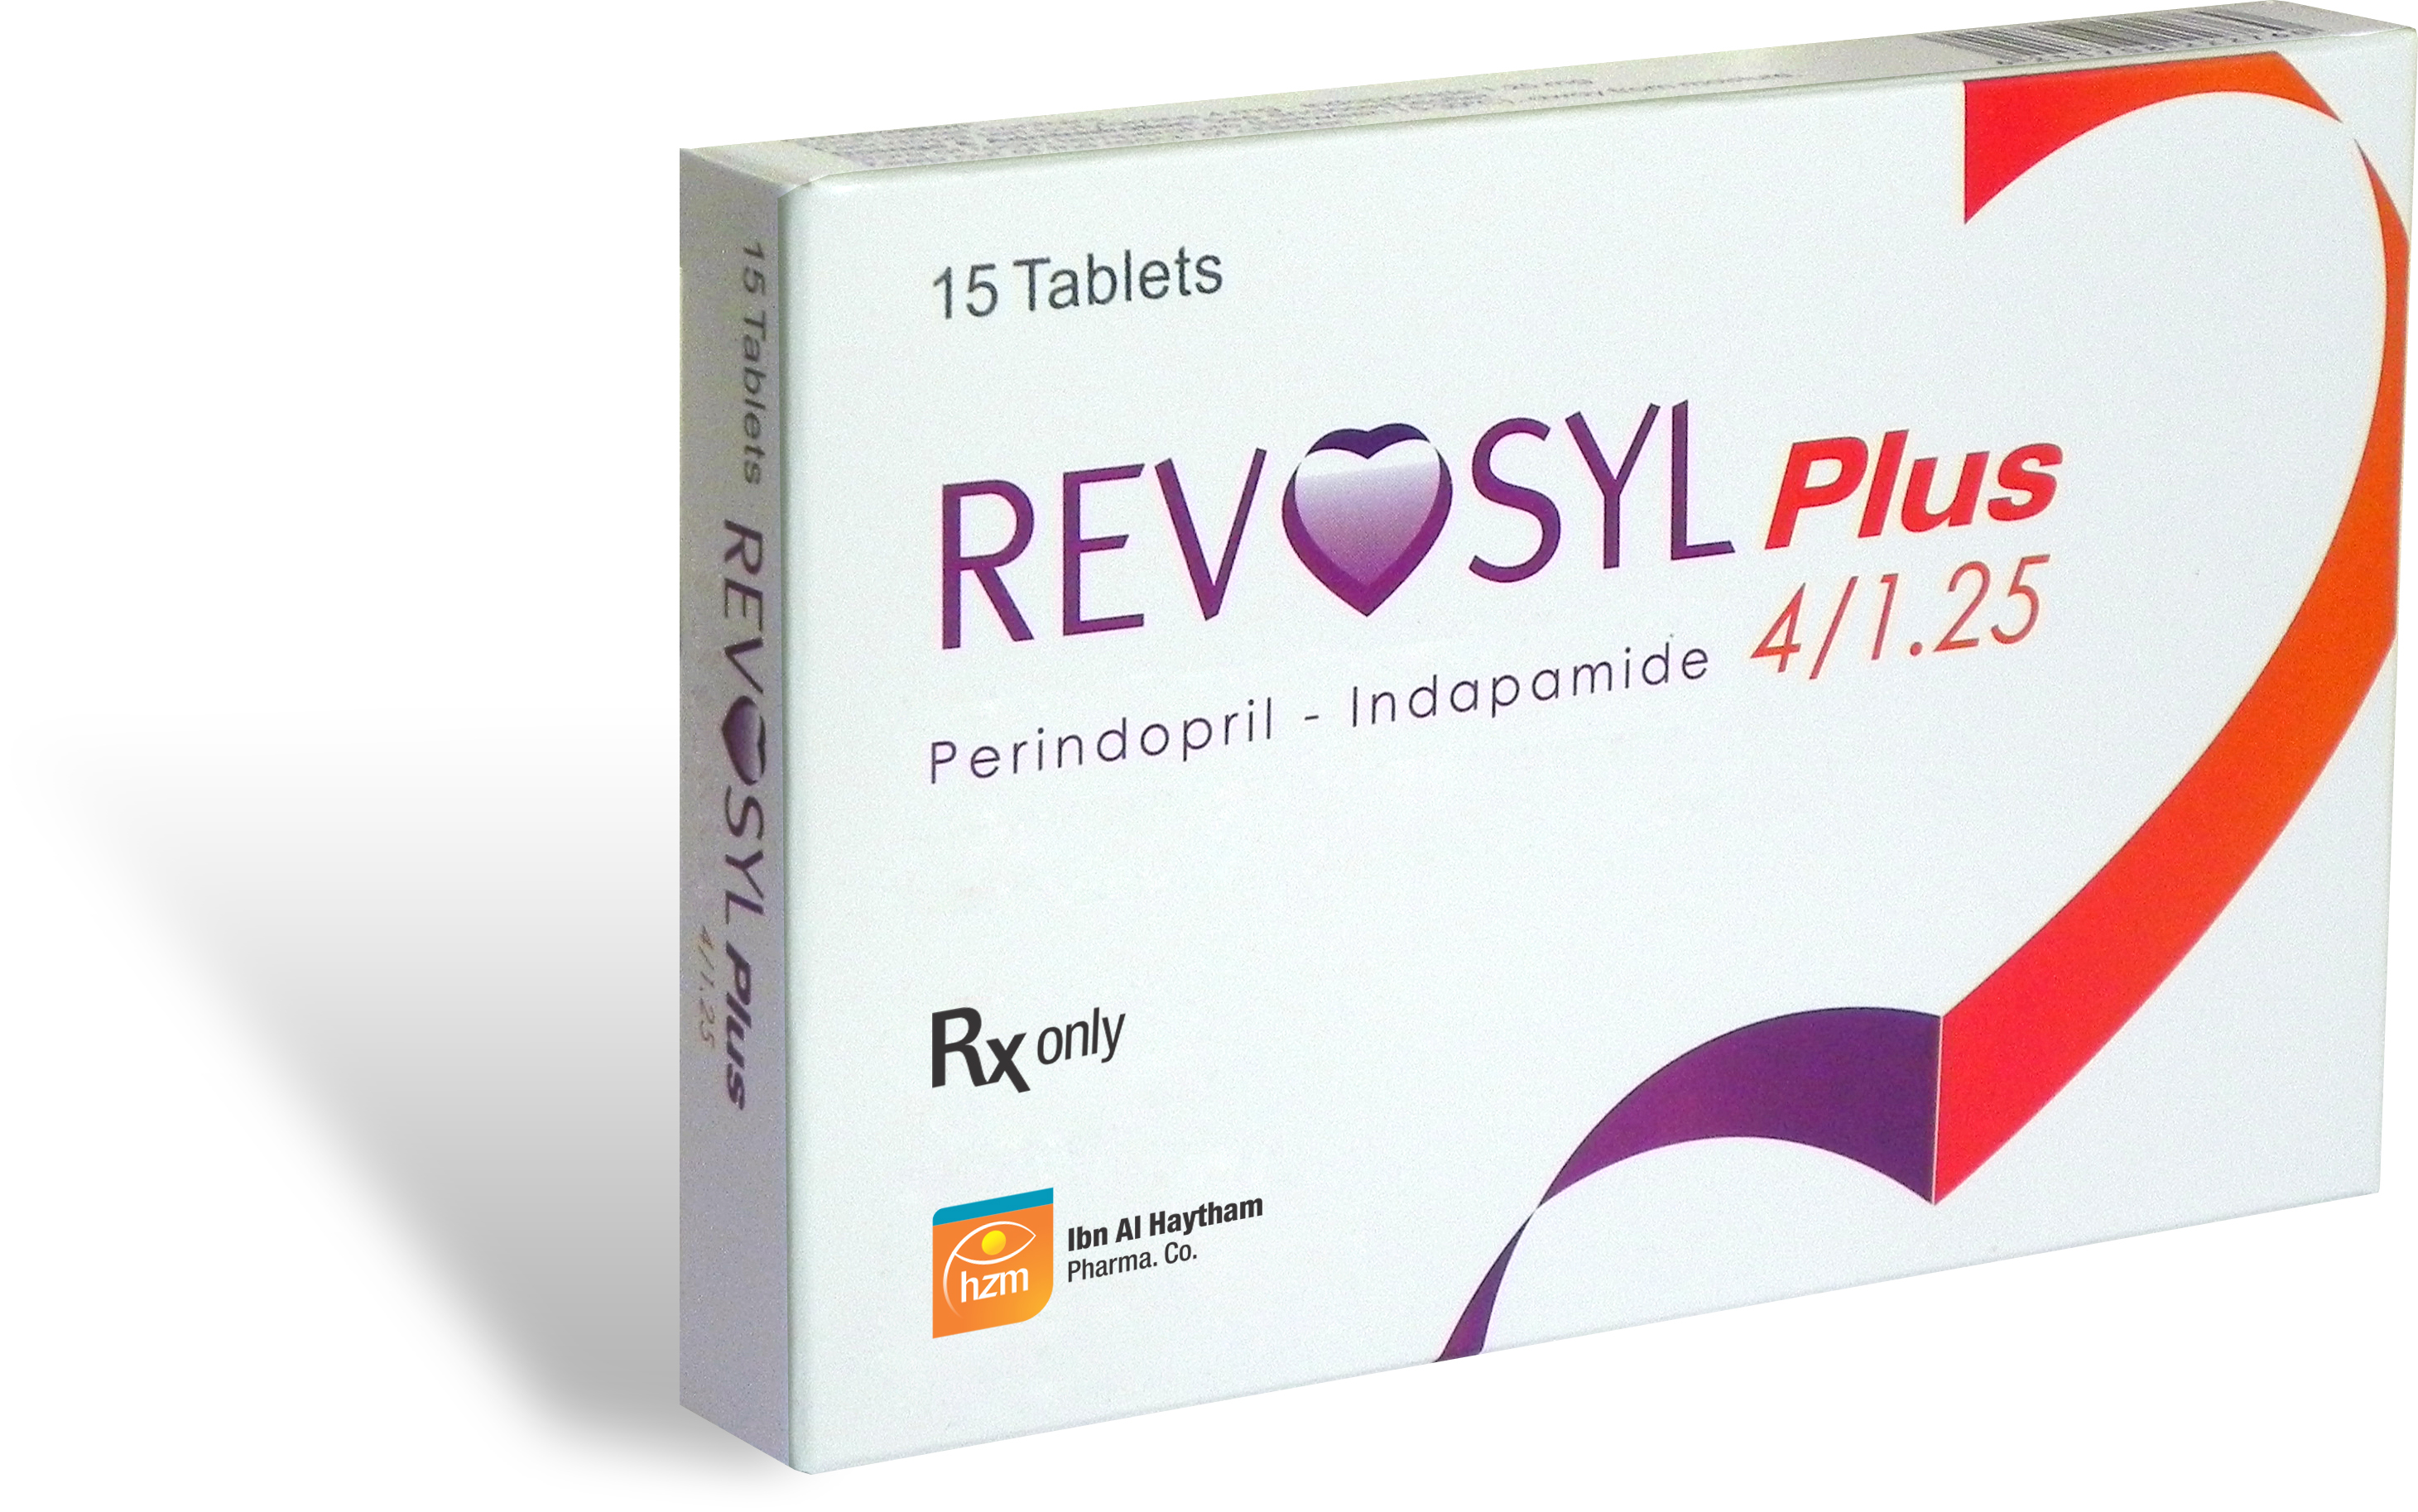 Revosyl Plus 4/1.25